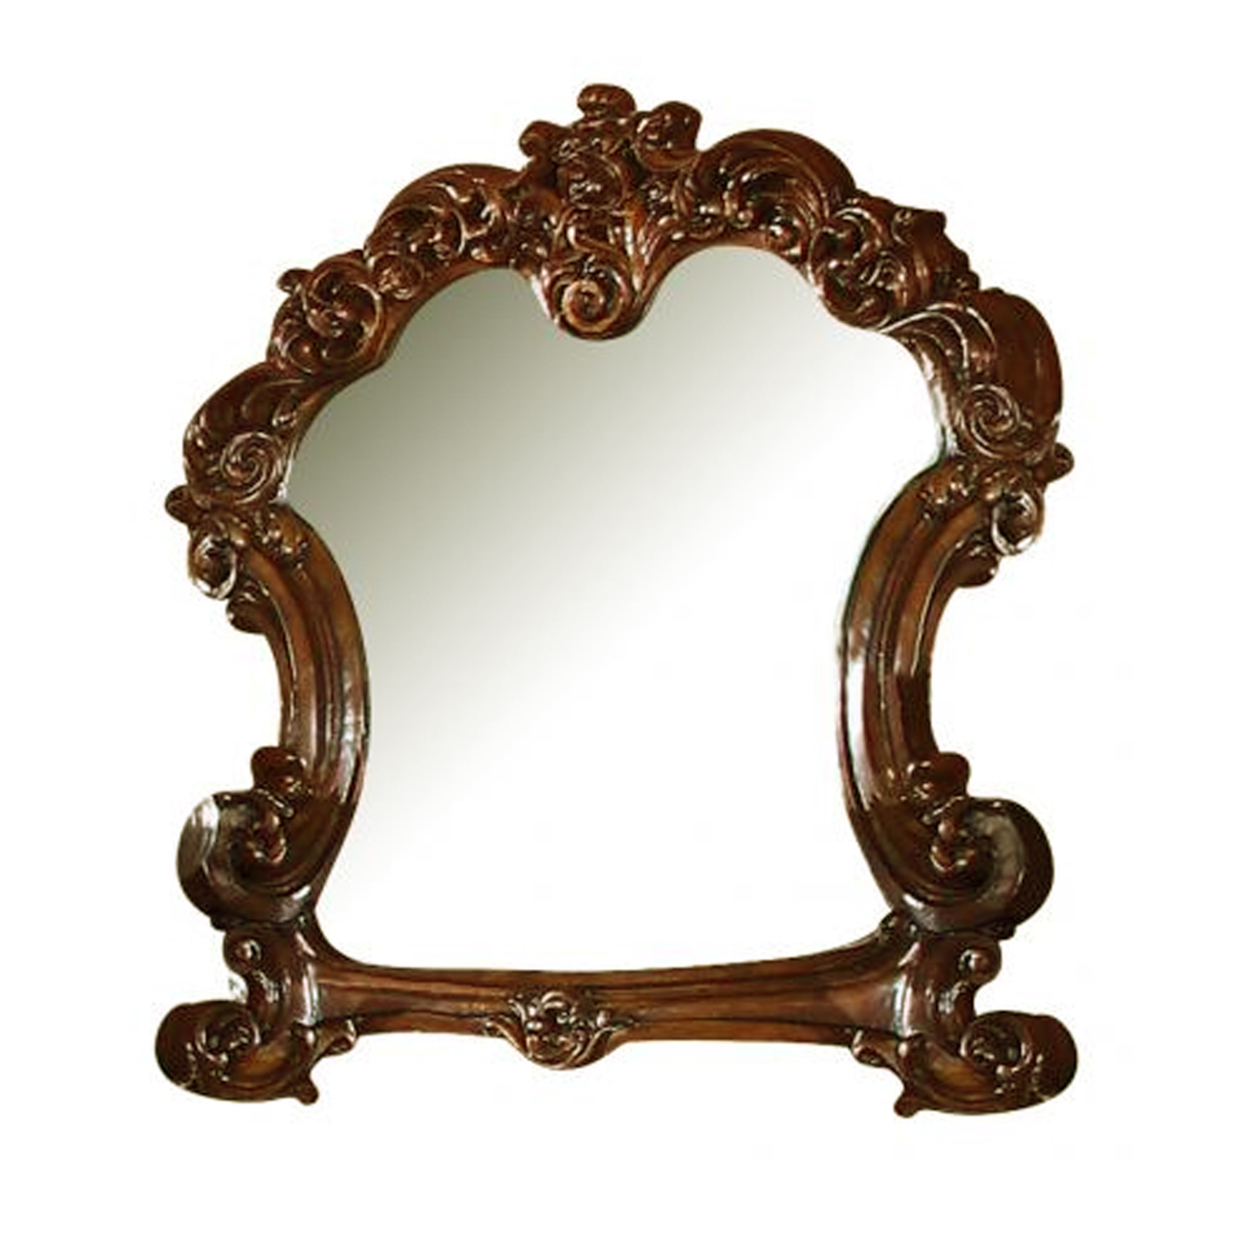 45 Inch Wooden Mirror With Scrolled Details, Brown- Saltoro Sherpi